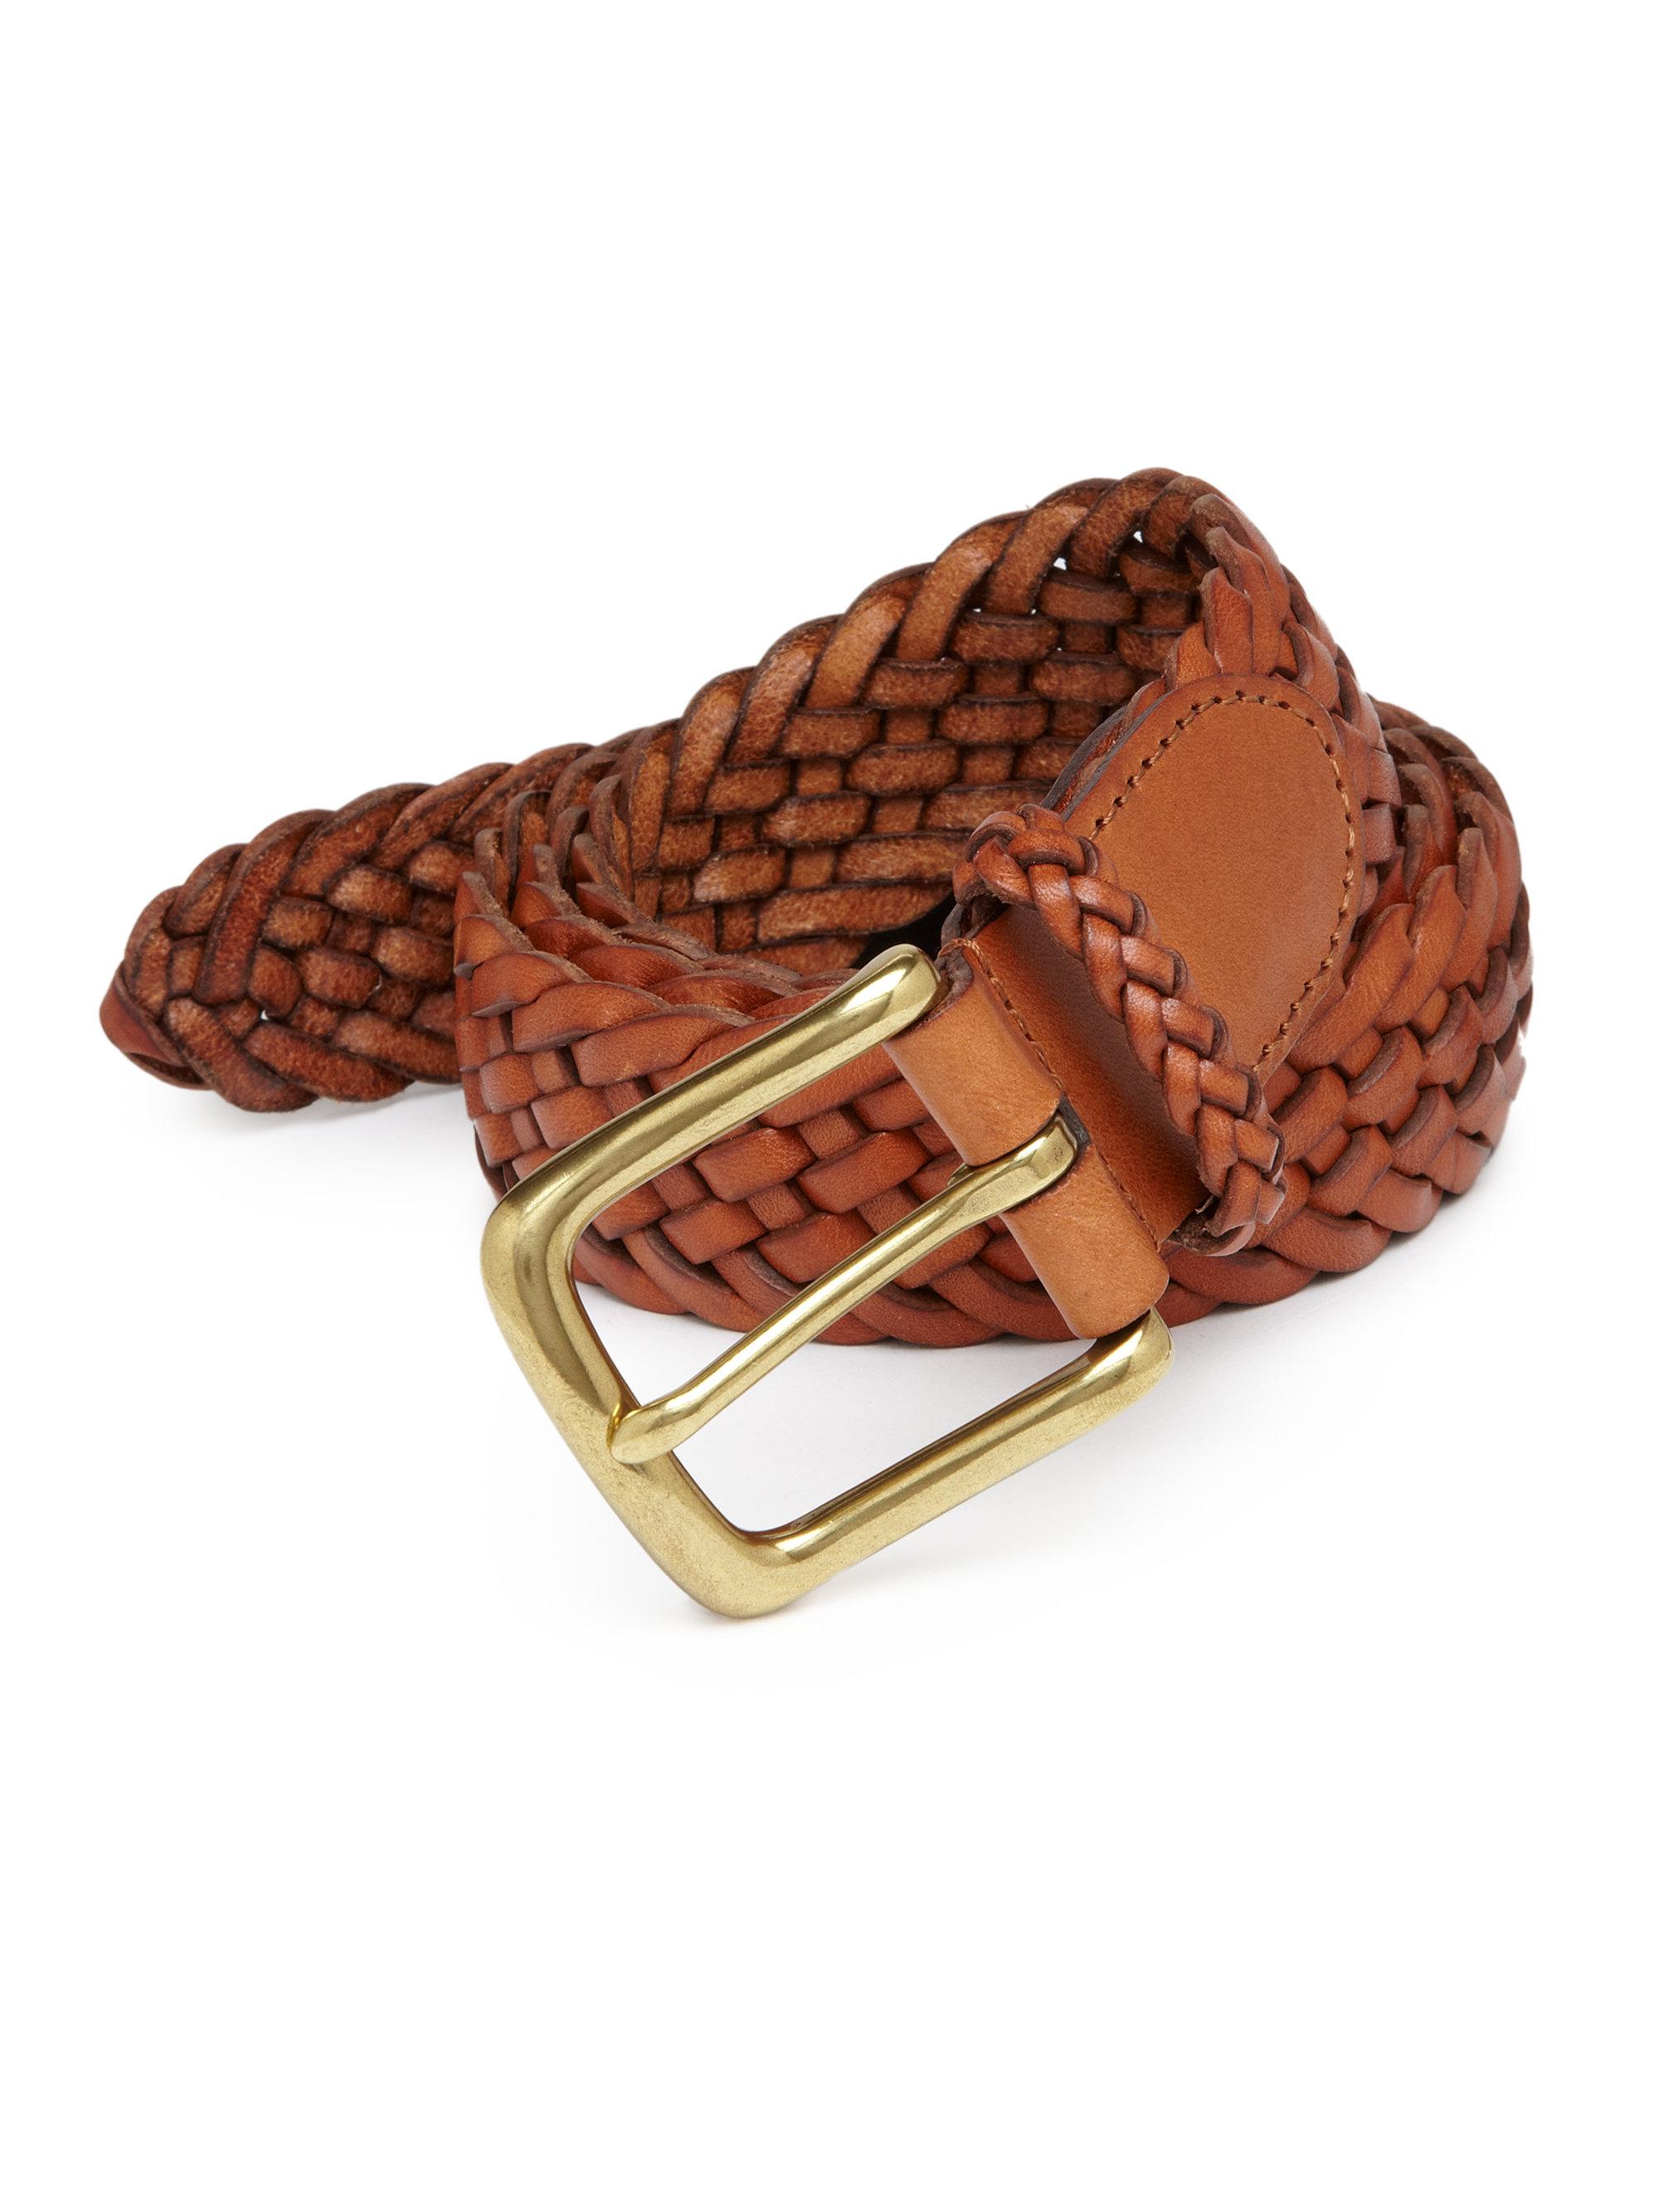 Polo Ralph Lauren Sportsman Braided Leather Belt in Brown for Men - Lyst